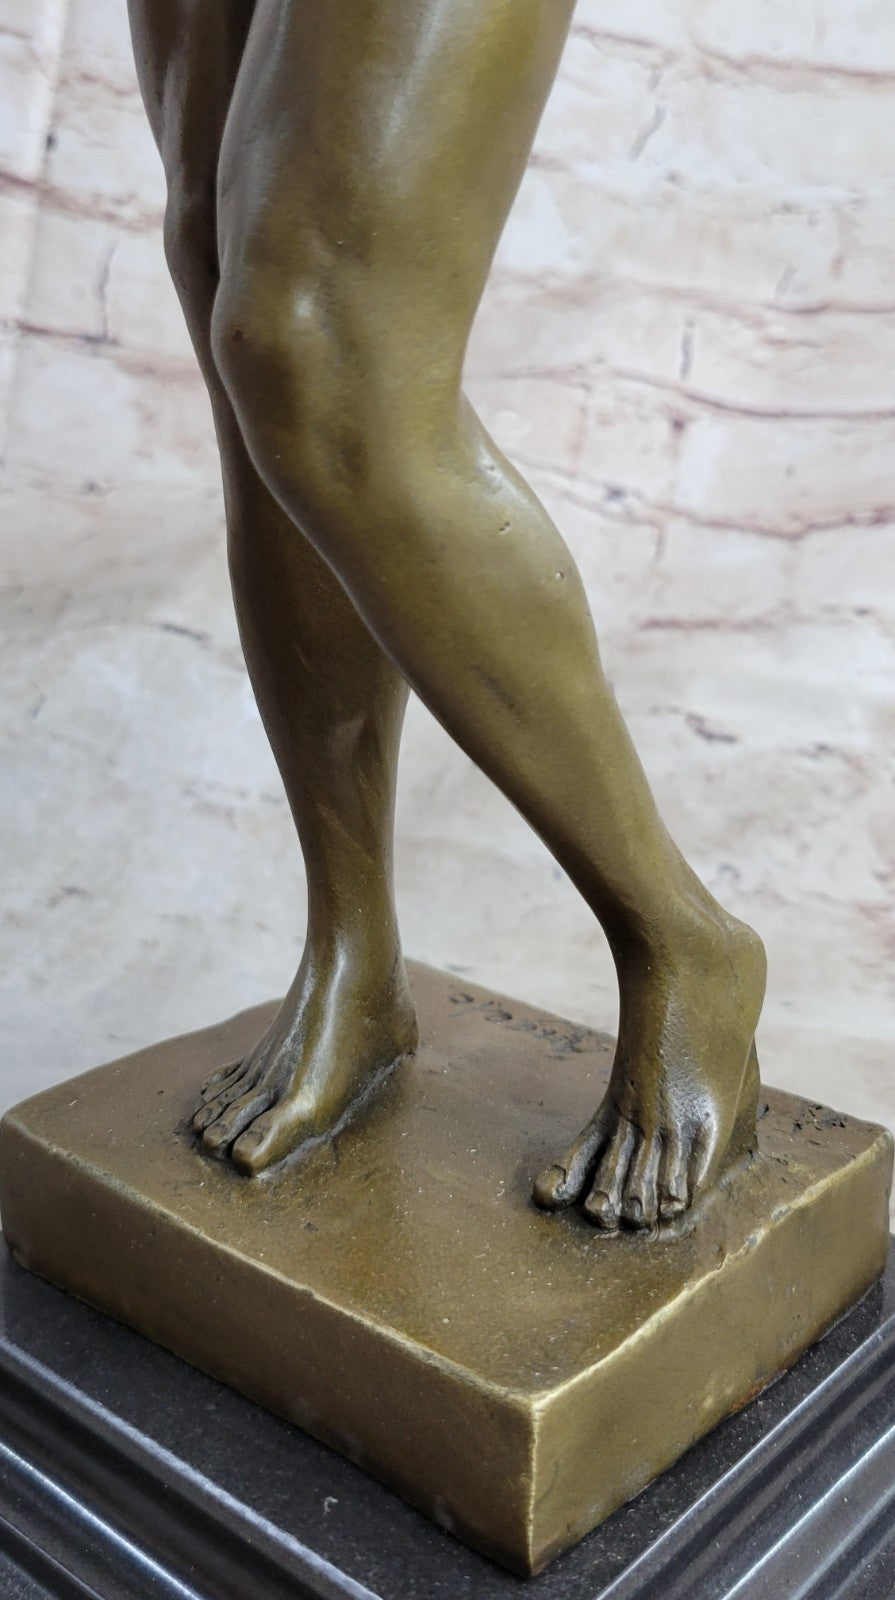 17" Tall Nude Male Man Michelangelo Bronze Sculpture Marble Base Figurine Sale